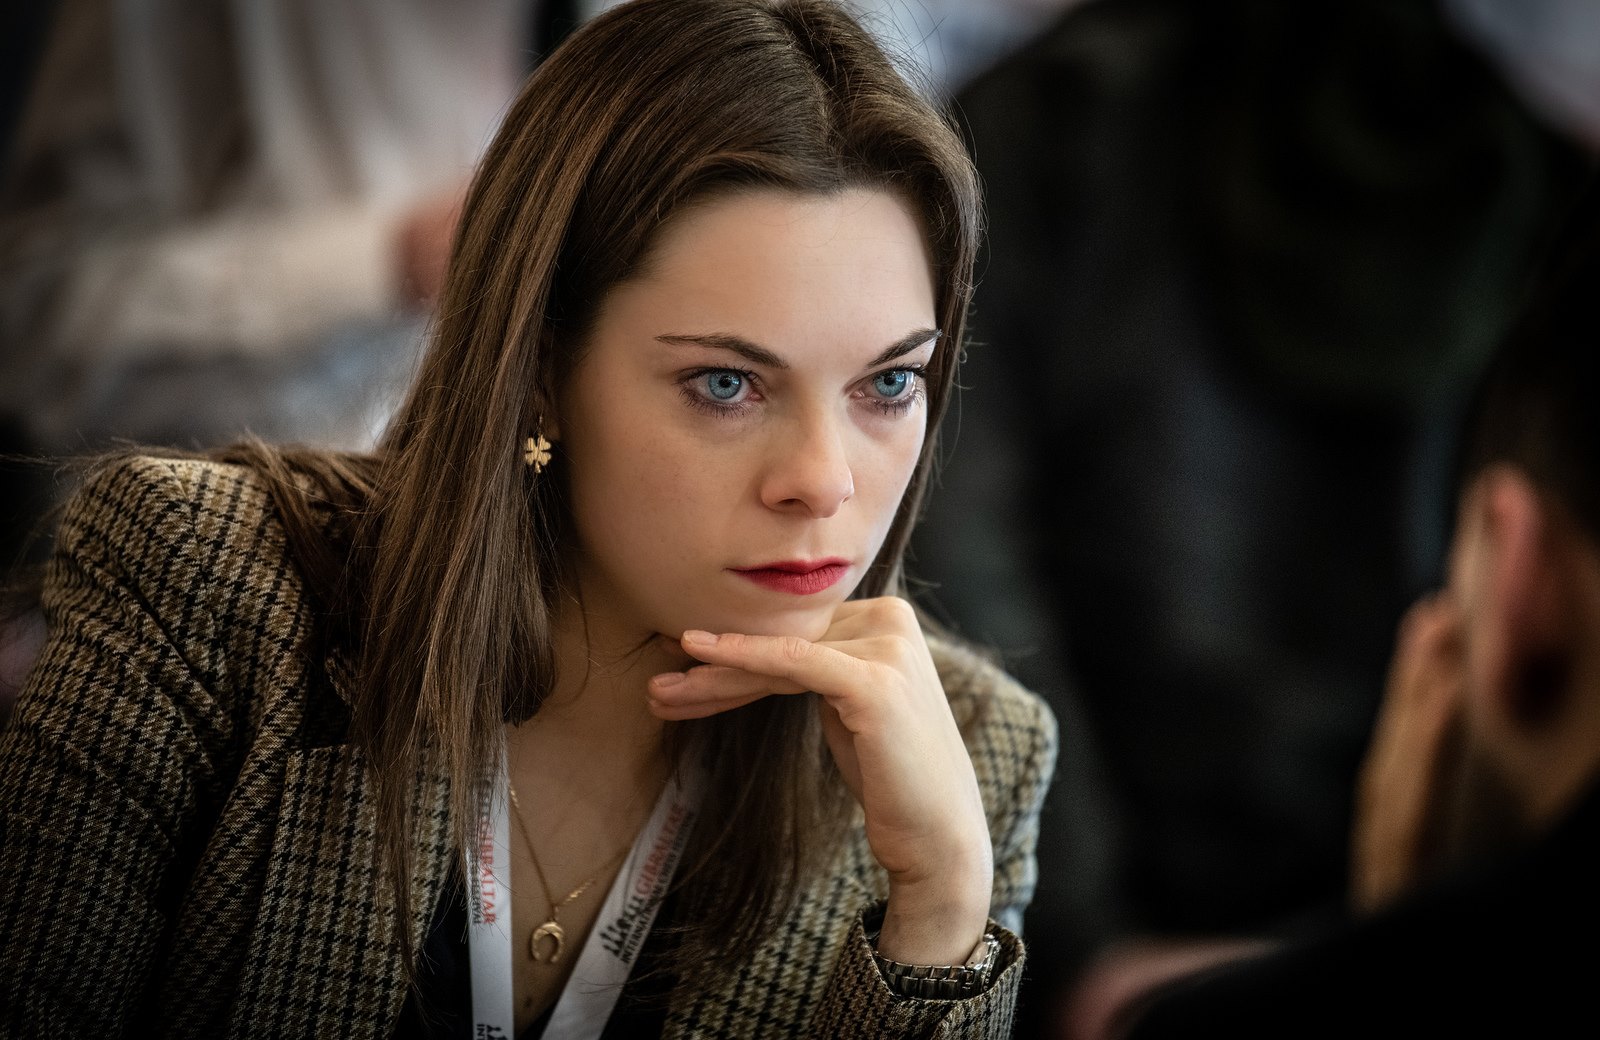 Chess NI - Congratulations to Russian WGM Dina Belenkaya